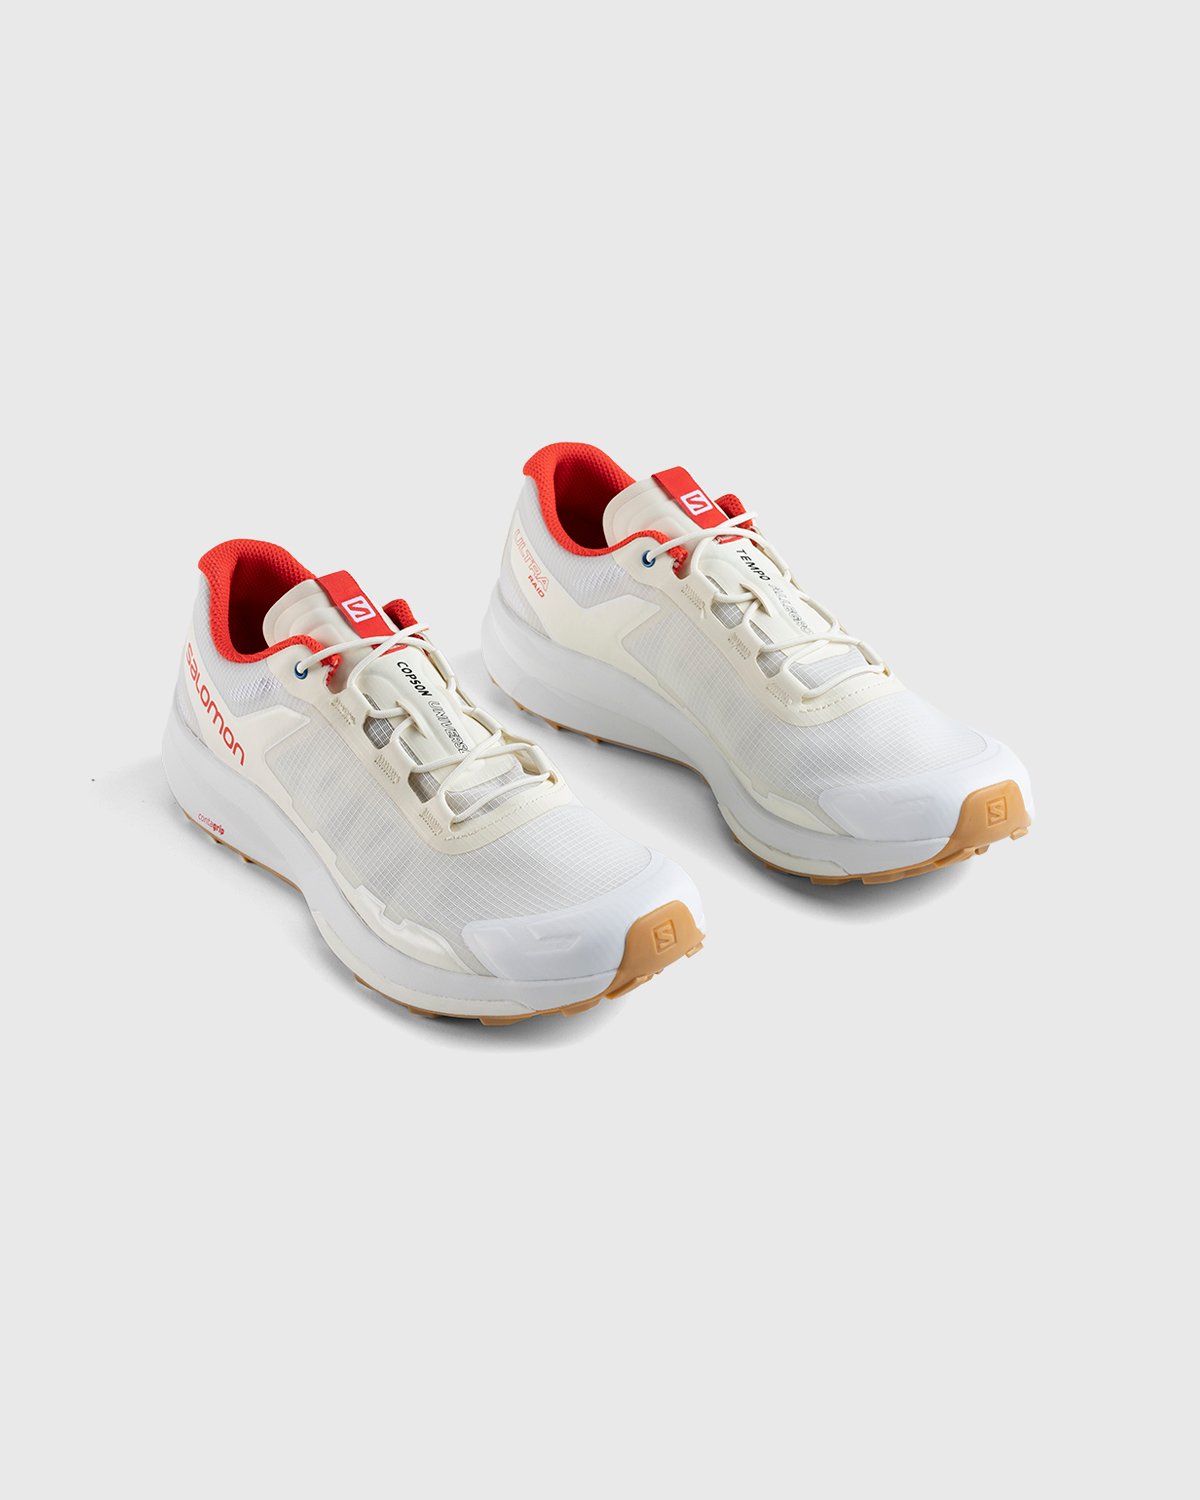 Copson x Salomon - Ultra Raid White/Red - Footwear - White - Image 3